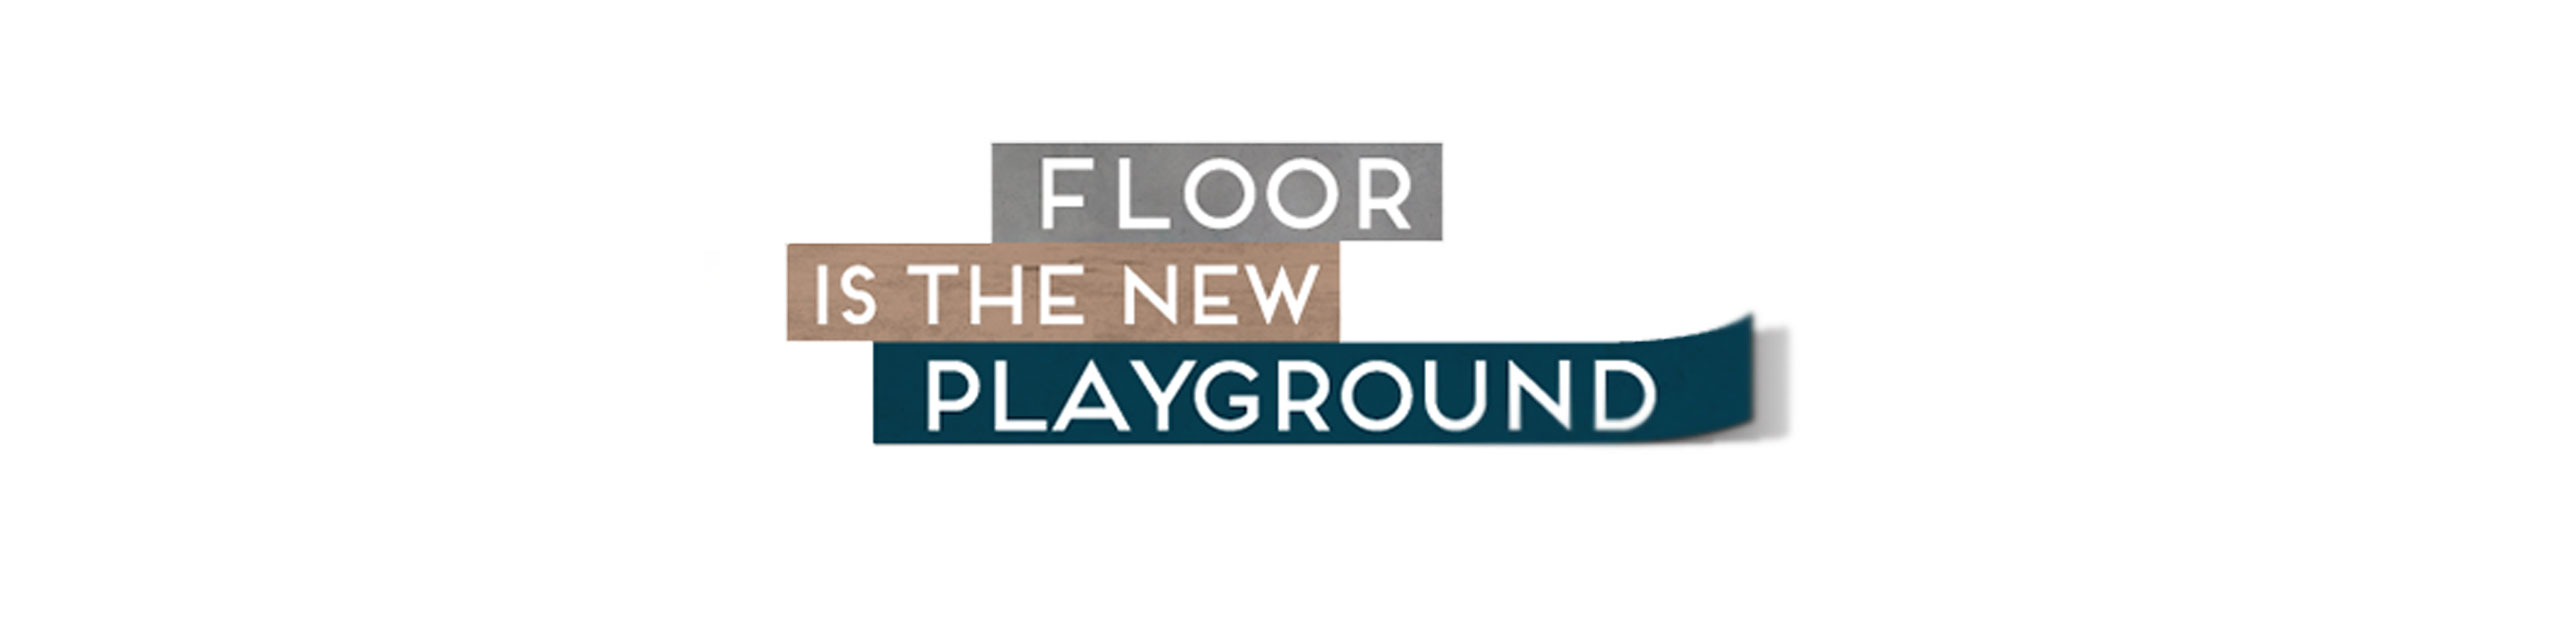 floor-is-the-new-playground2